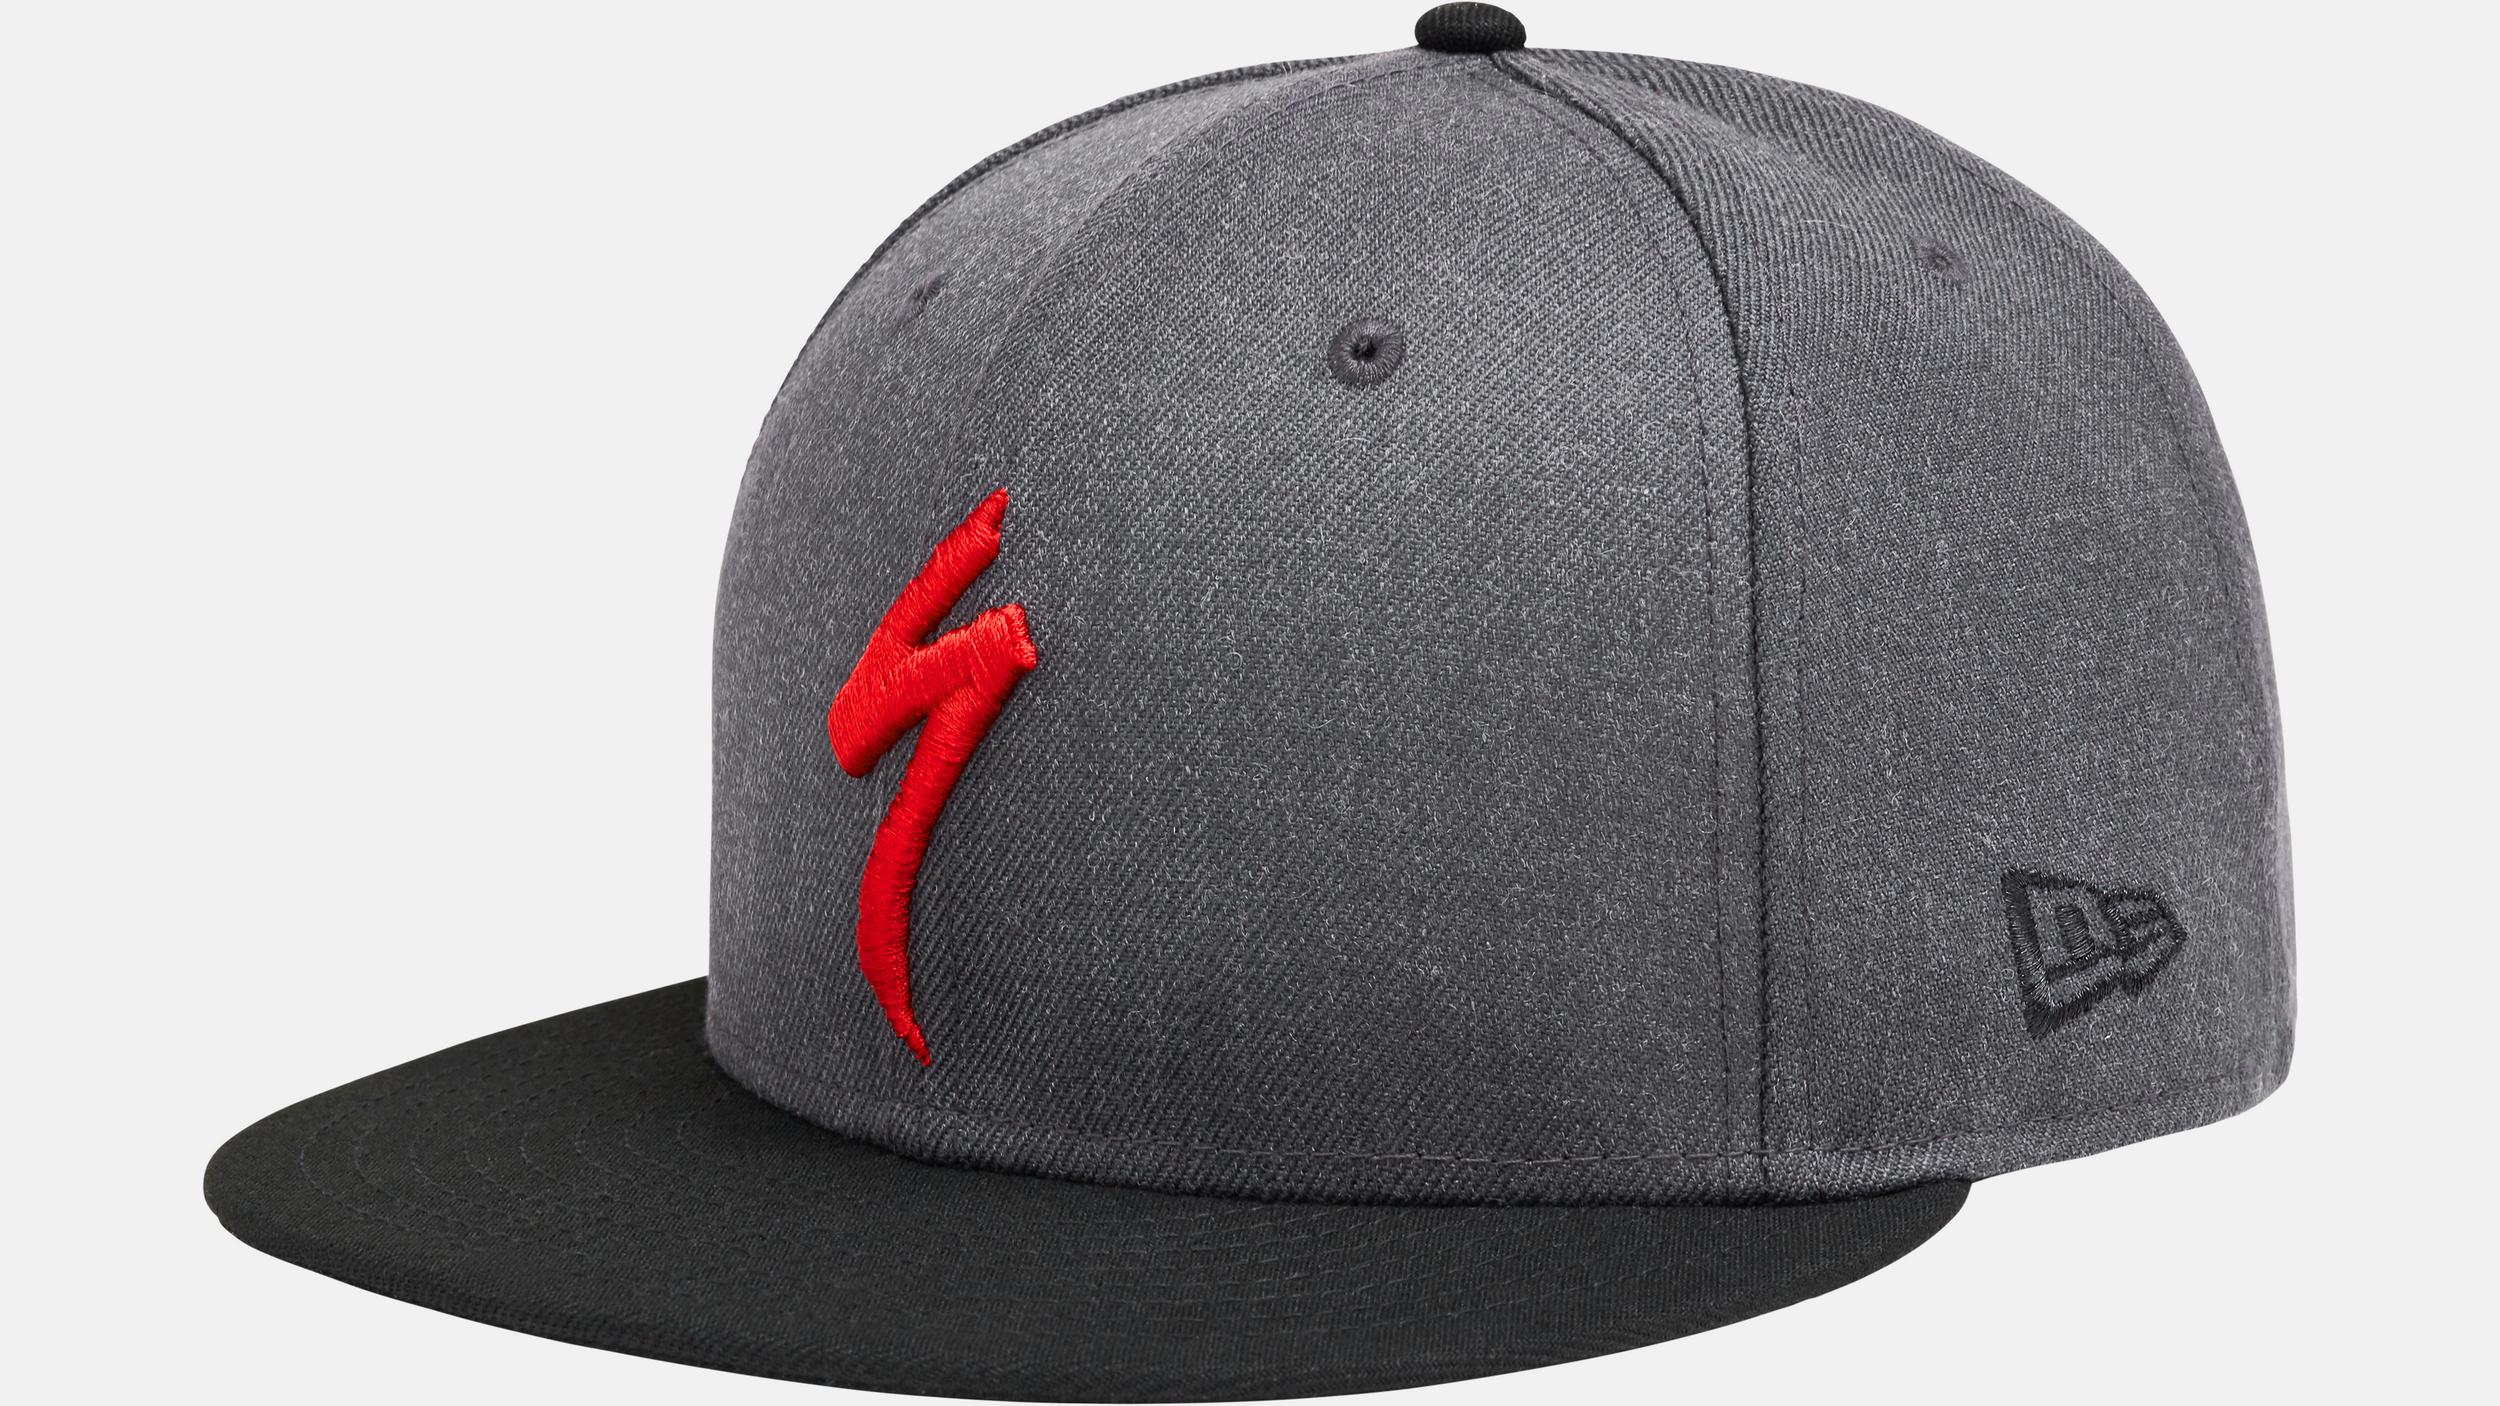 New Era 9Fifty Snapback Specialized Hat